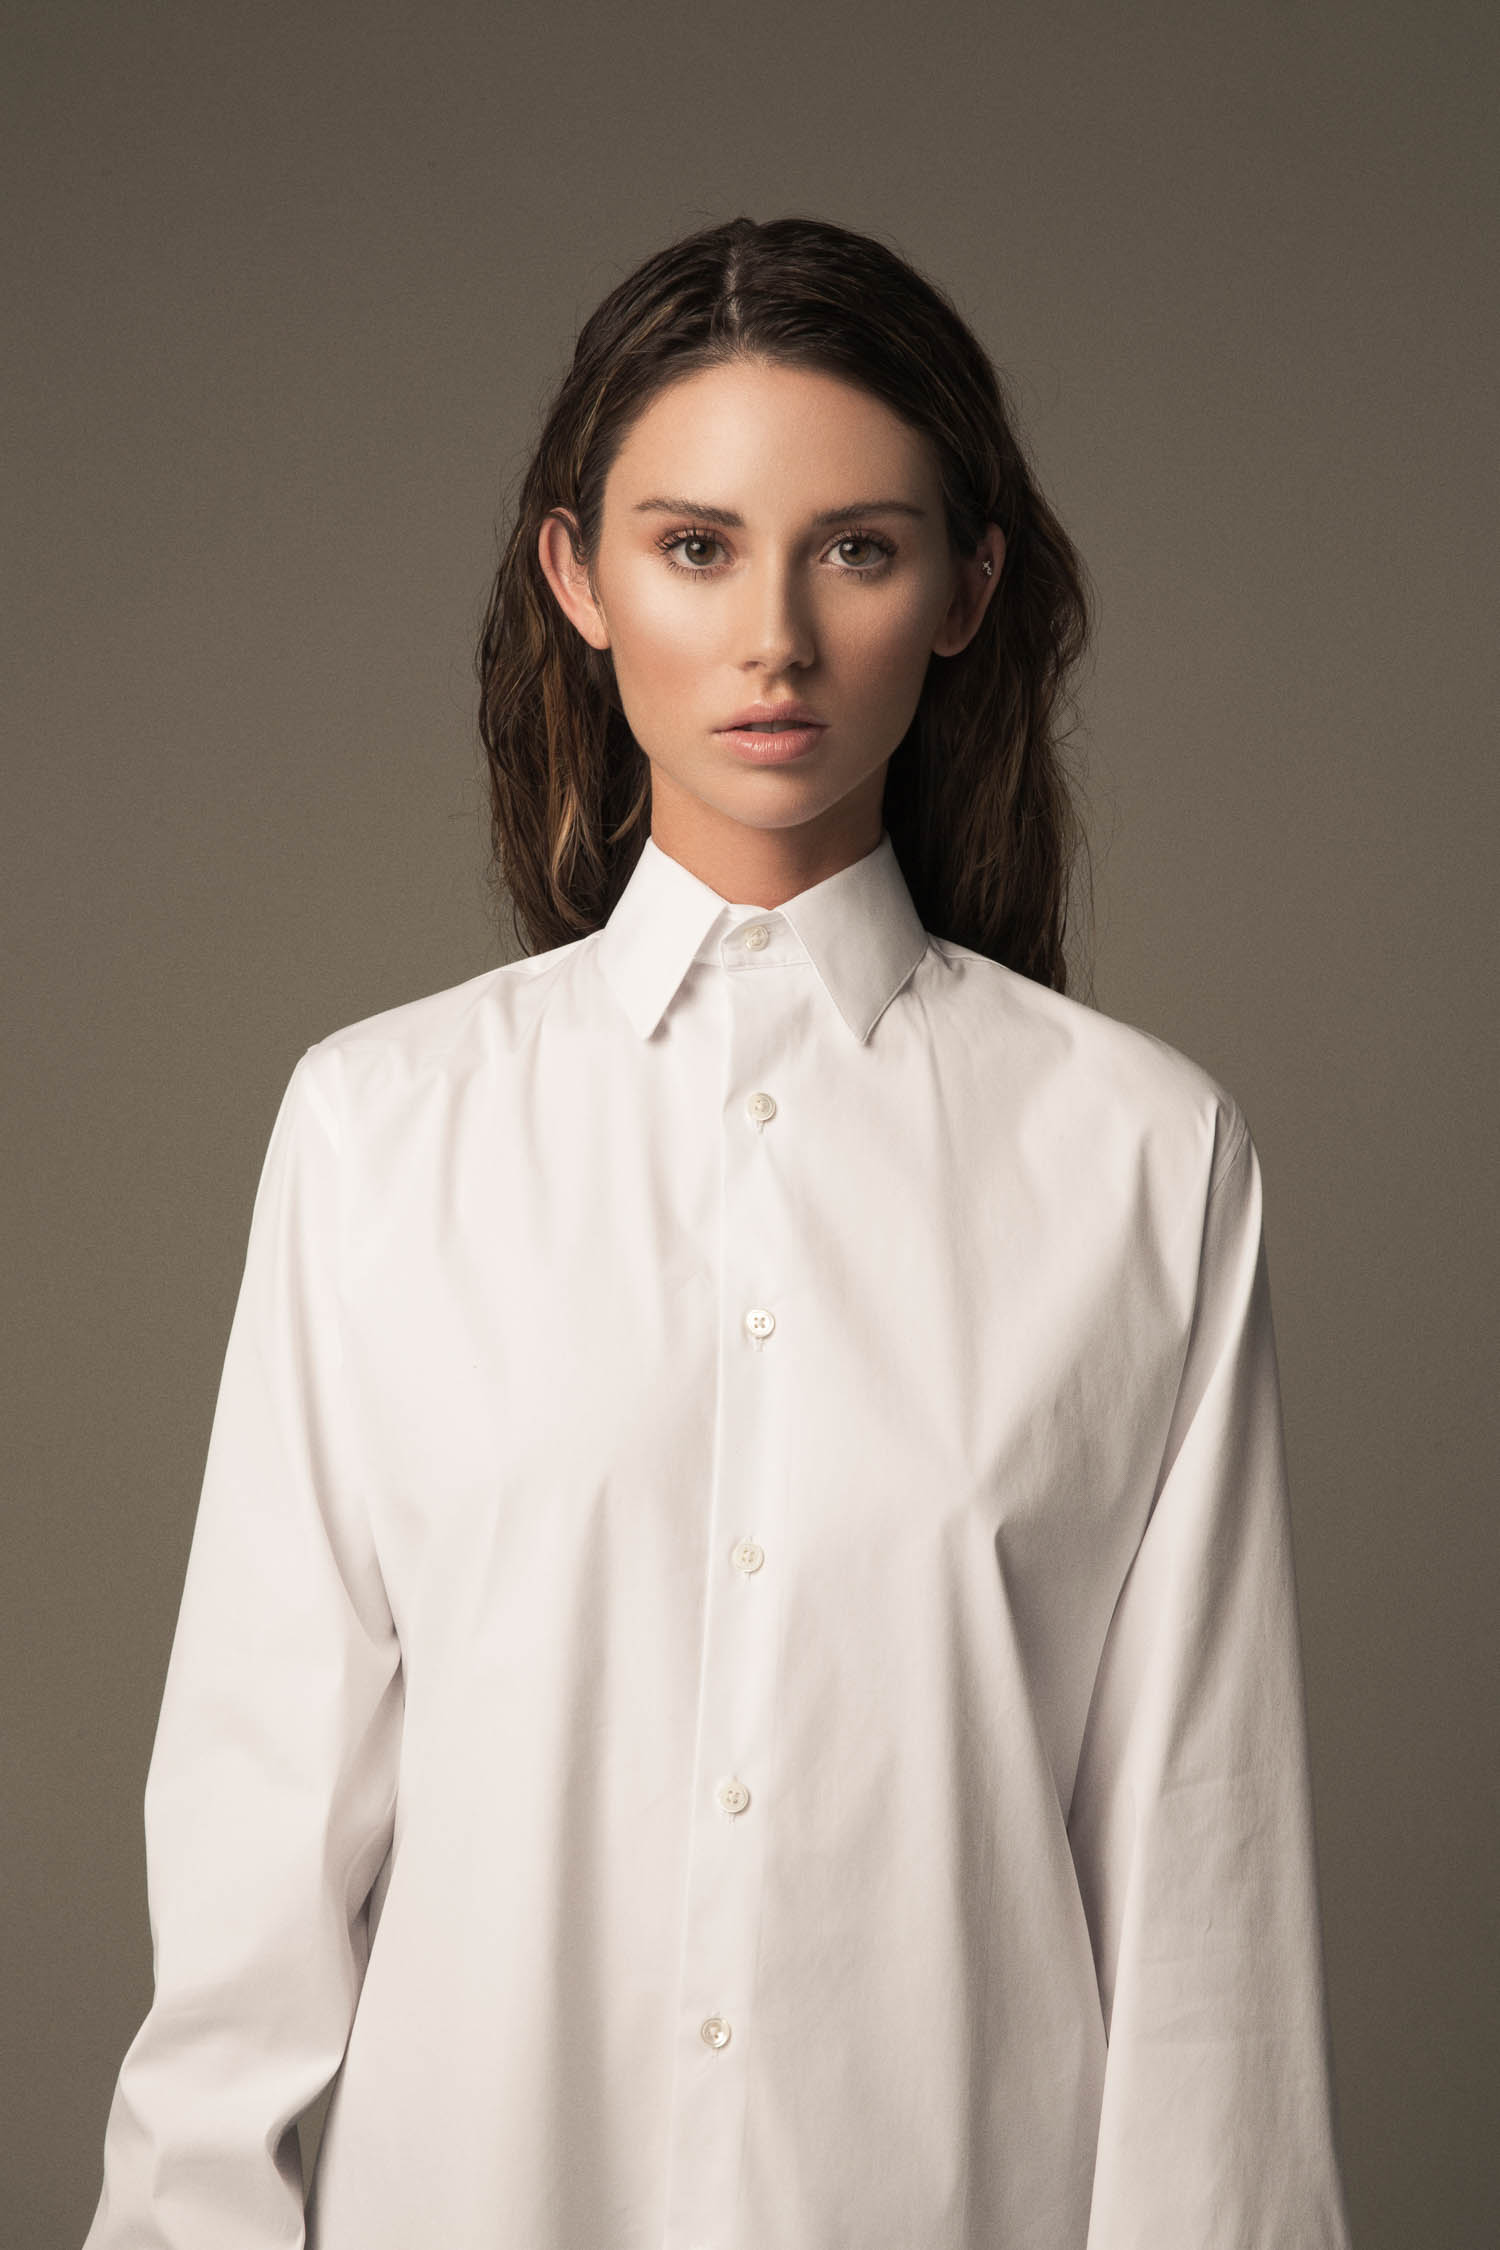 Portrait of a woman in a white men's dress shirt.